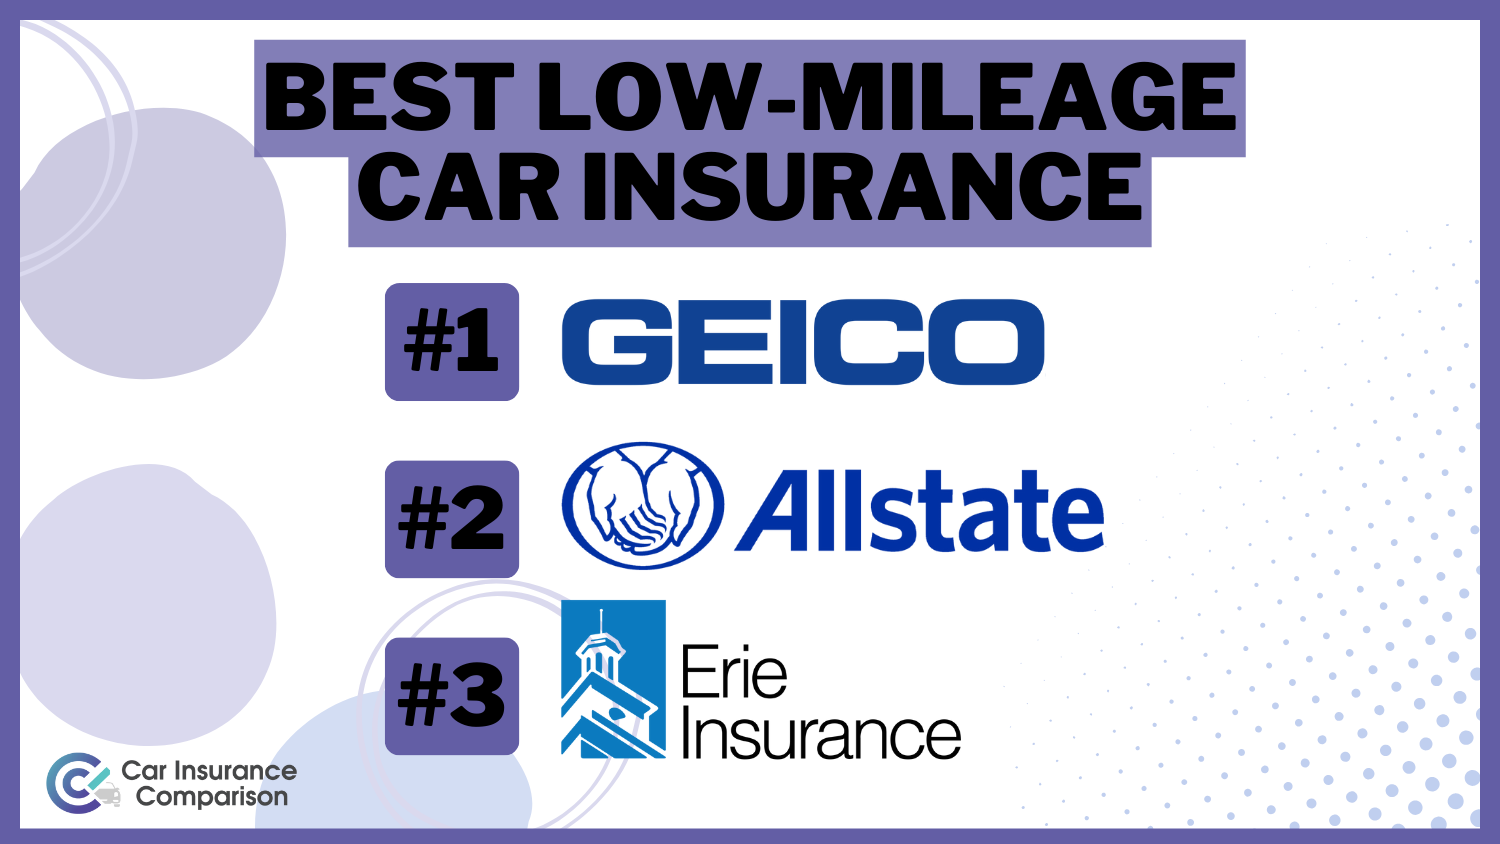 Best Low-Mileage Car Insurance: Geico, Allstate, Erie